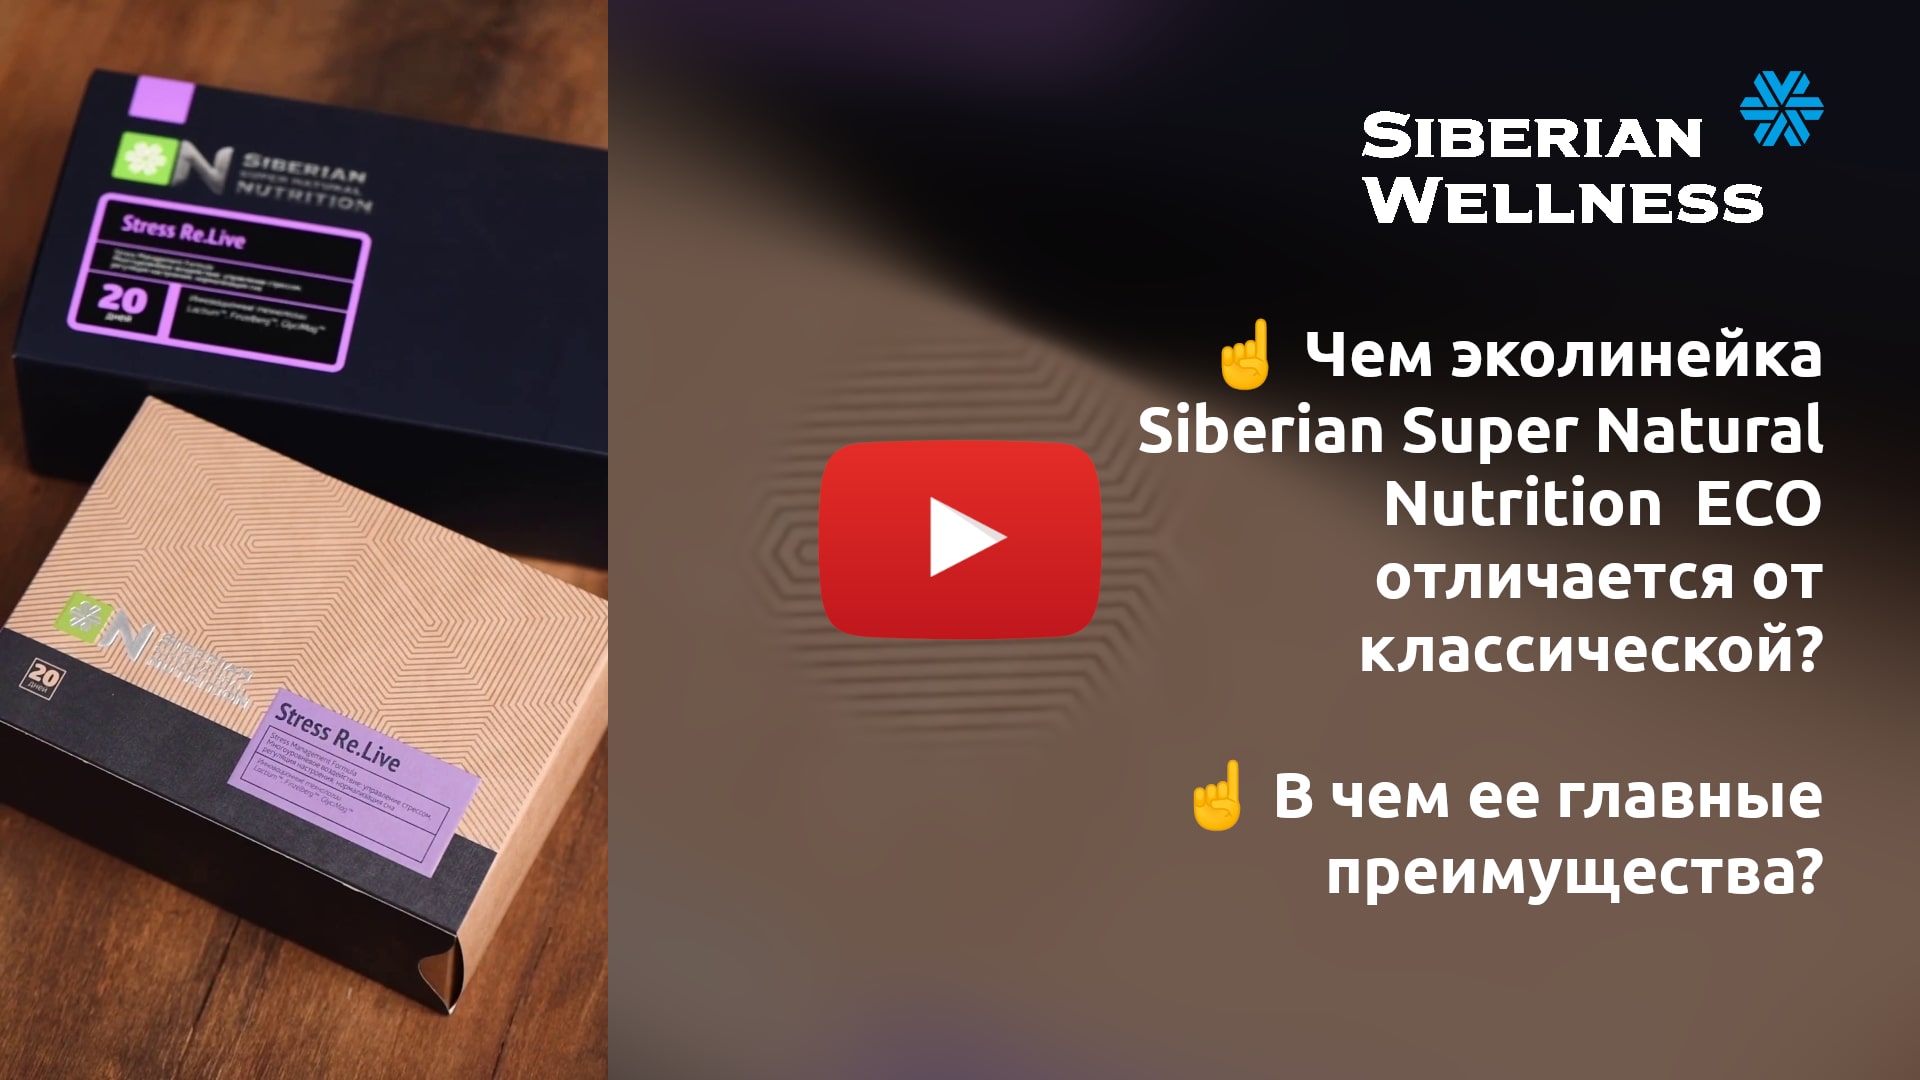 Stress Re.Live Siberian Super Natural Nutrition ECO ❄ Siberian Wellness / Сибирское Здоровье